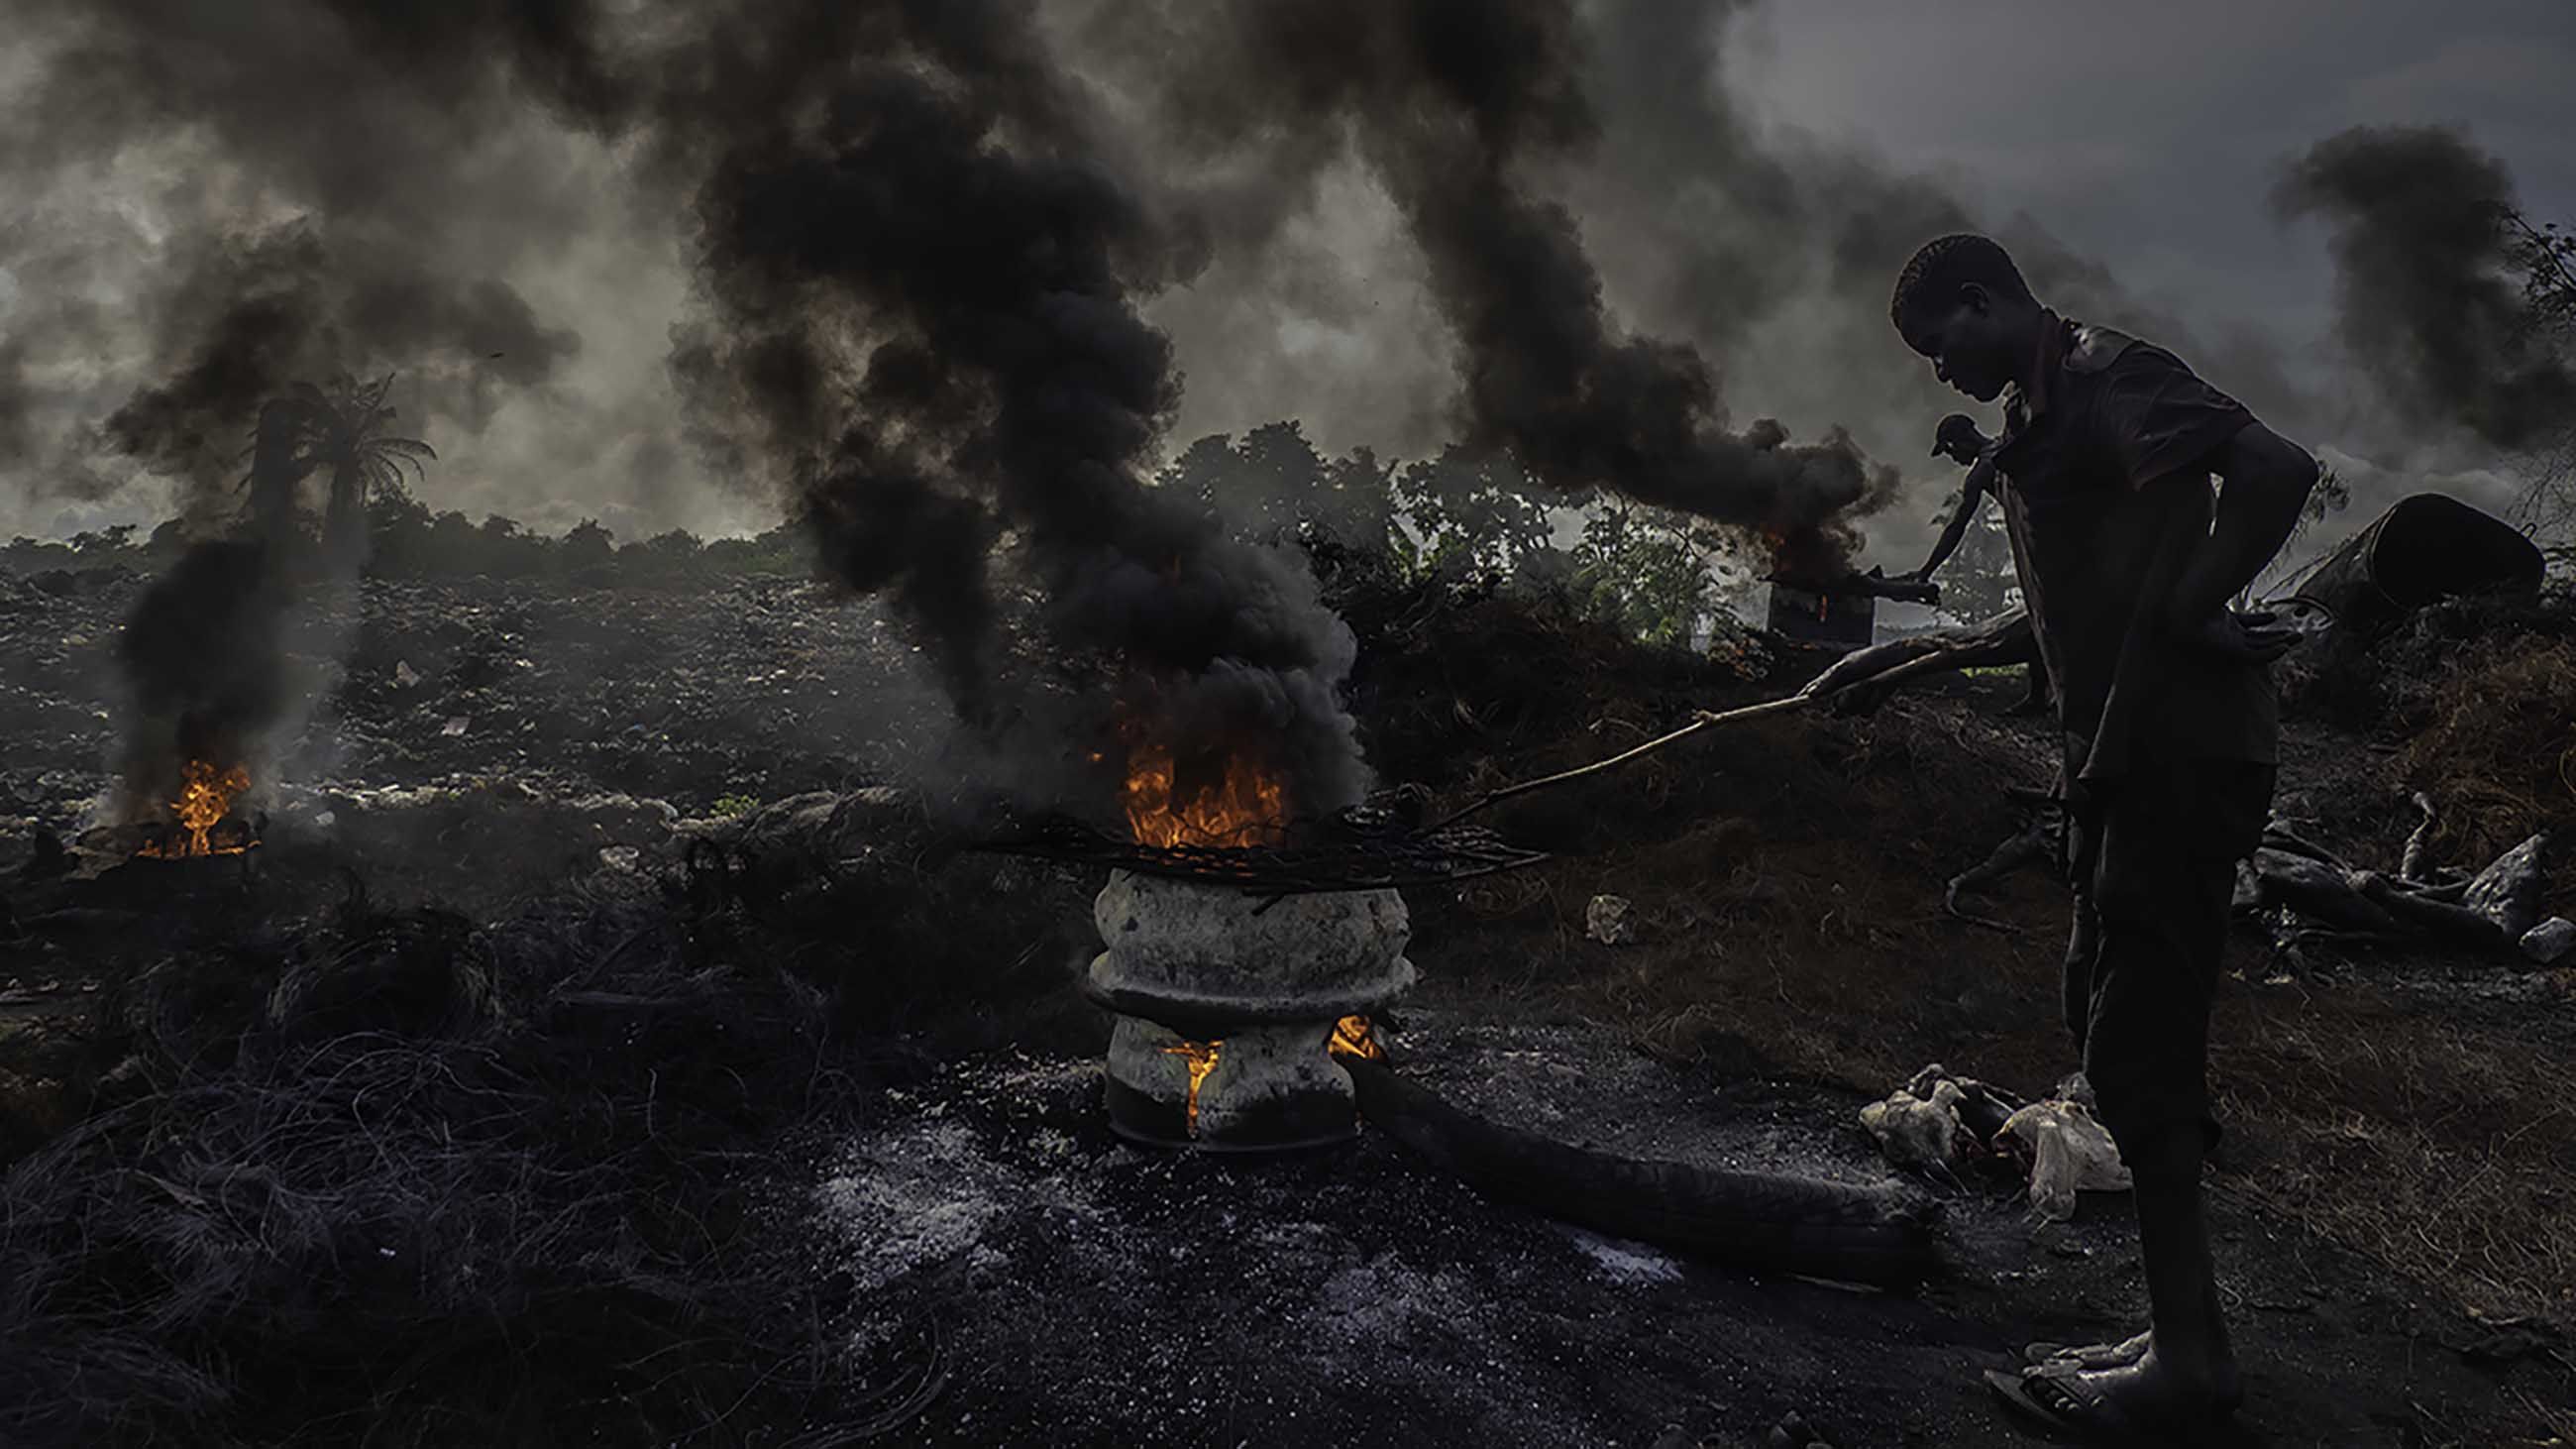 Image by Larry C. Price. Nigeria, 2018.